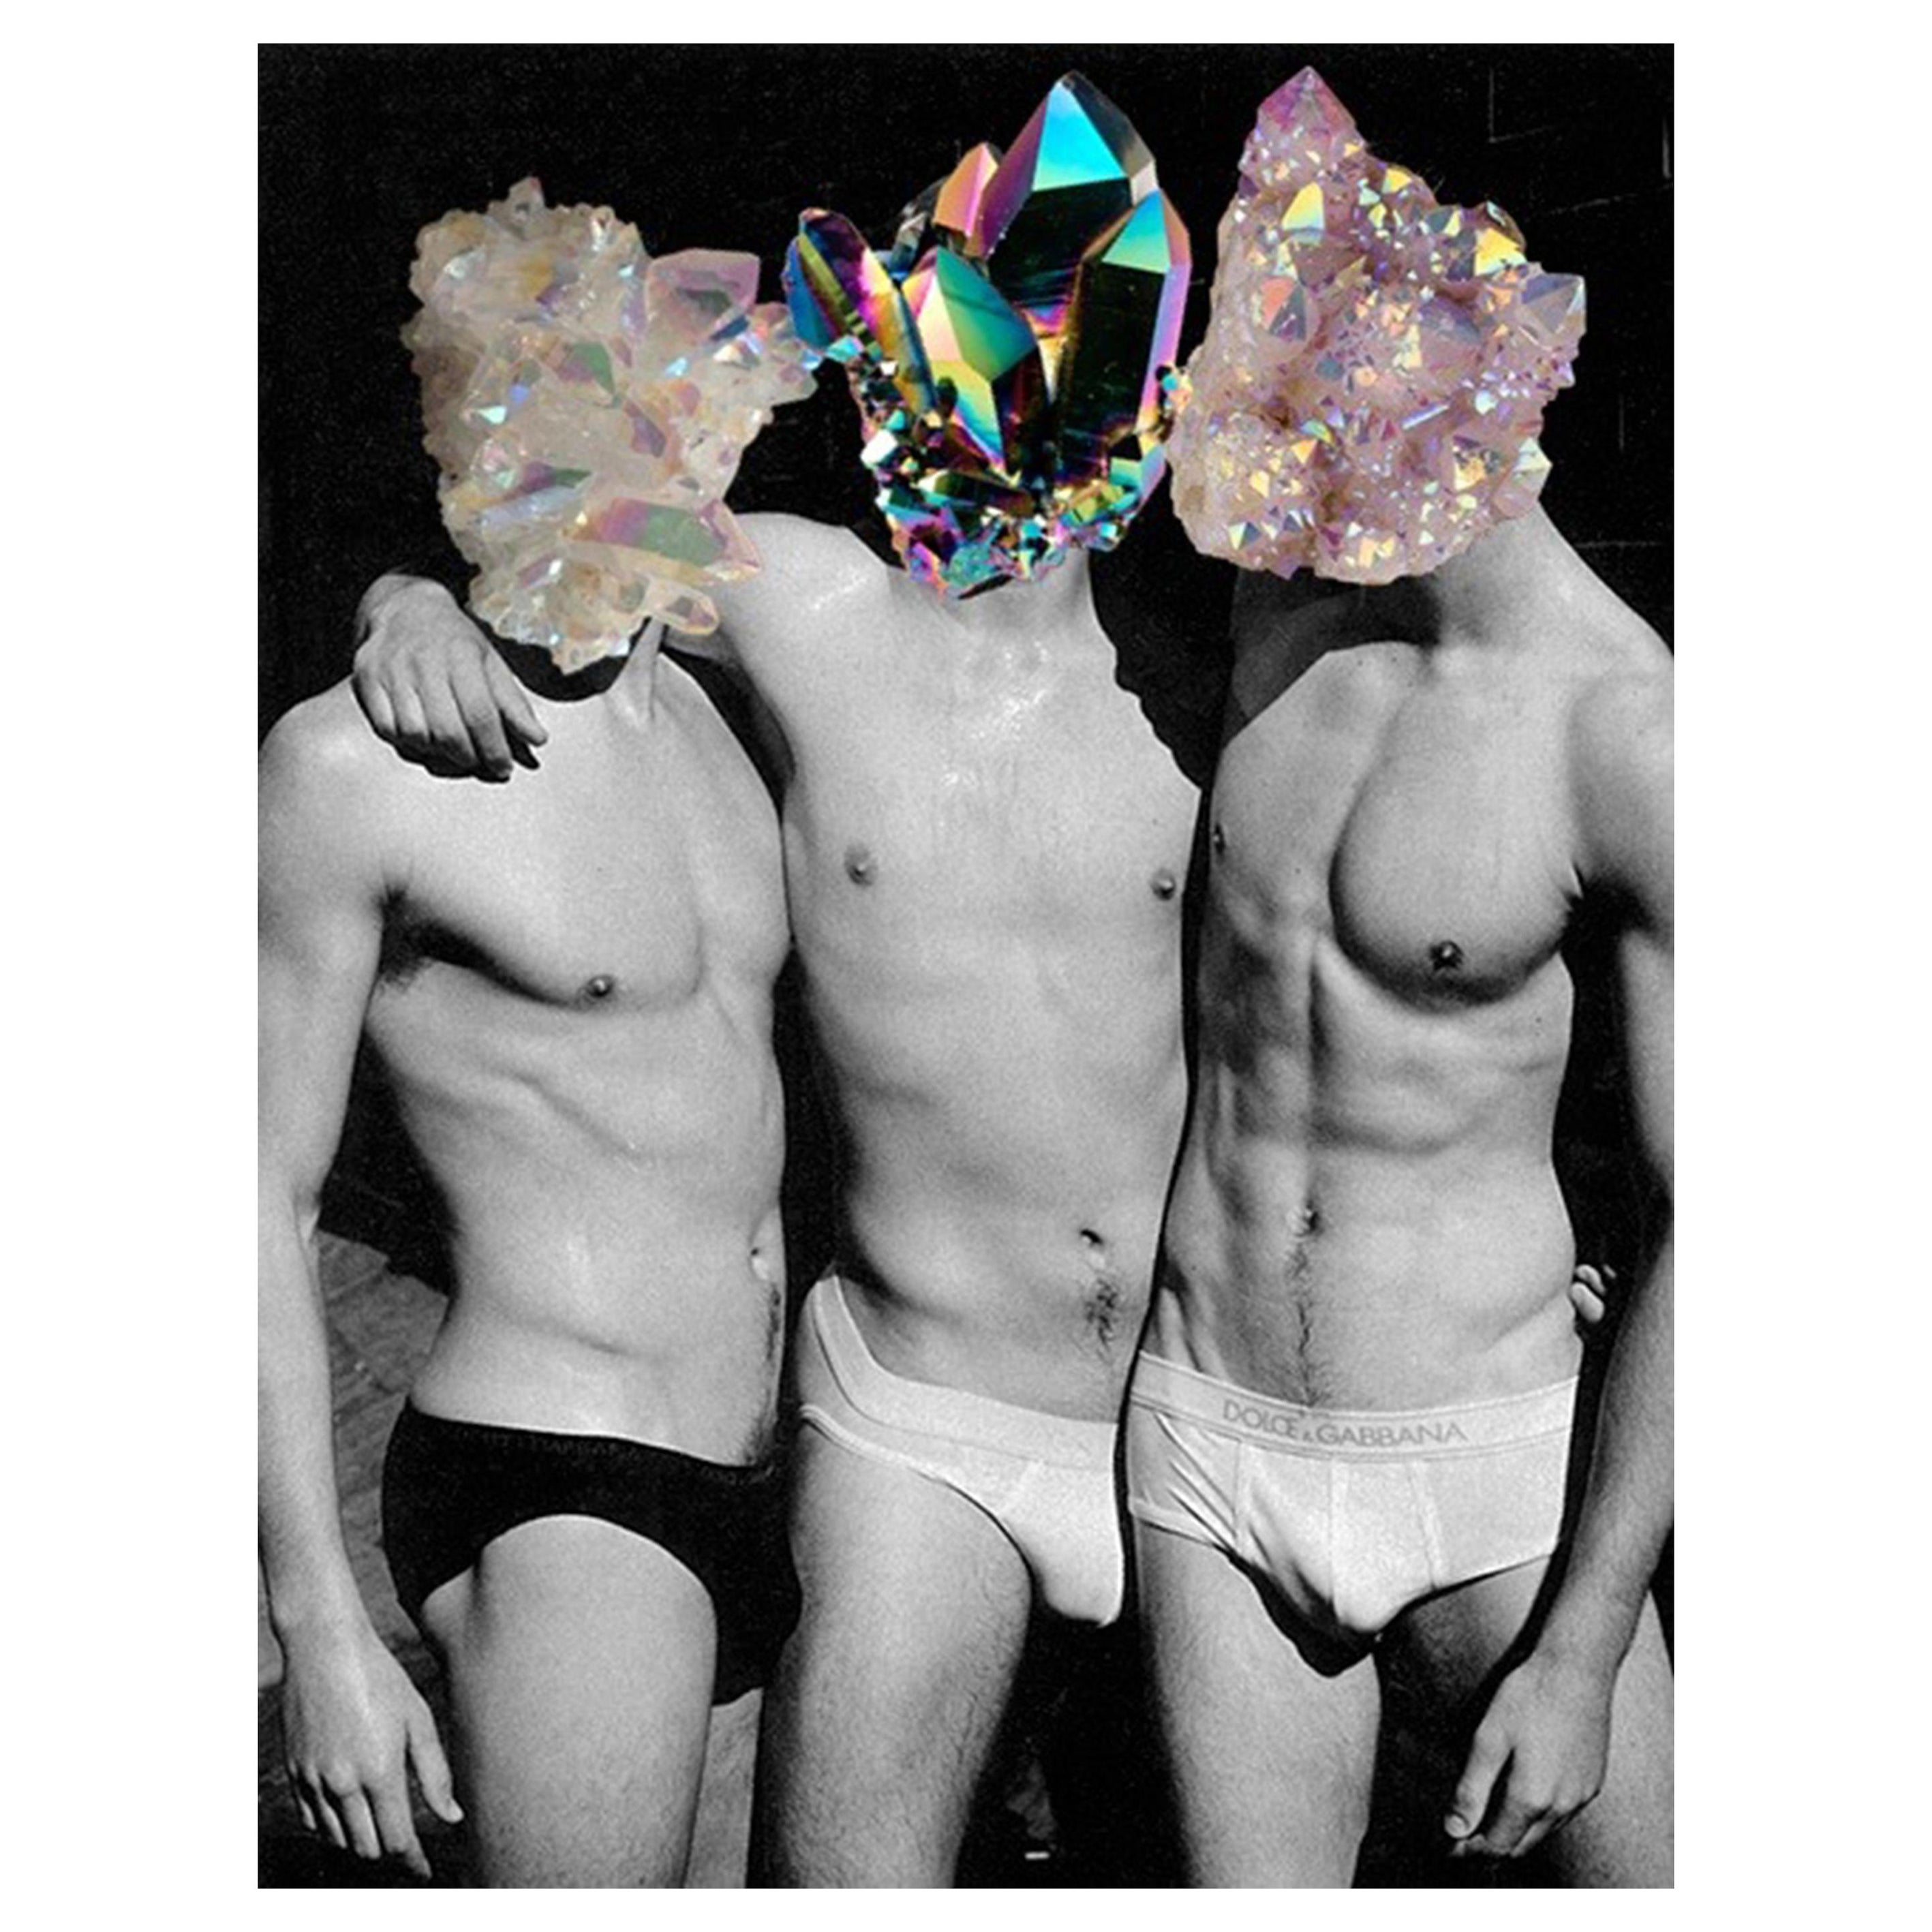 Crystals Boys in Underwear Naropinosa, "Untitled" Digital Collage, Spain, 2019 For Sale